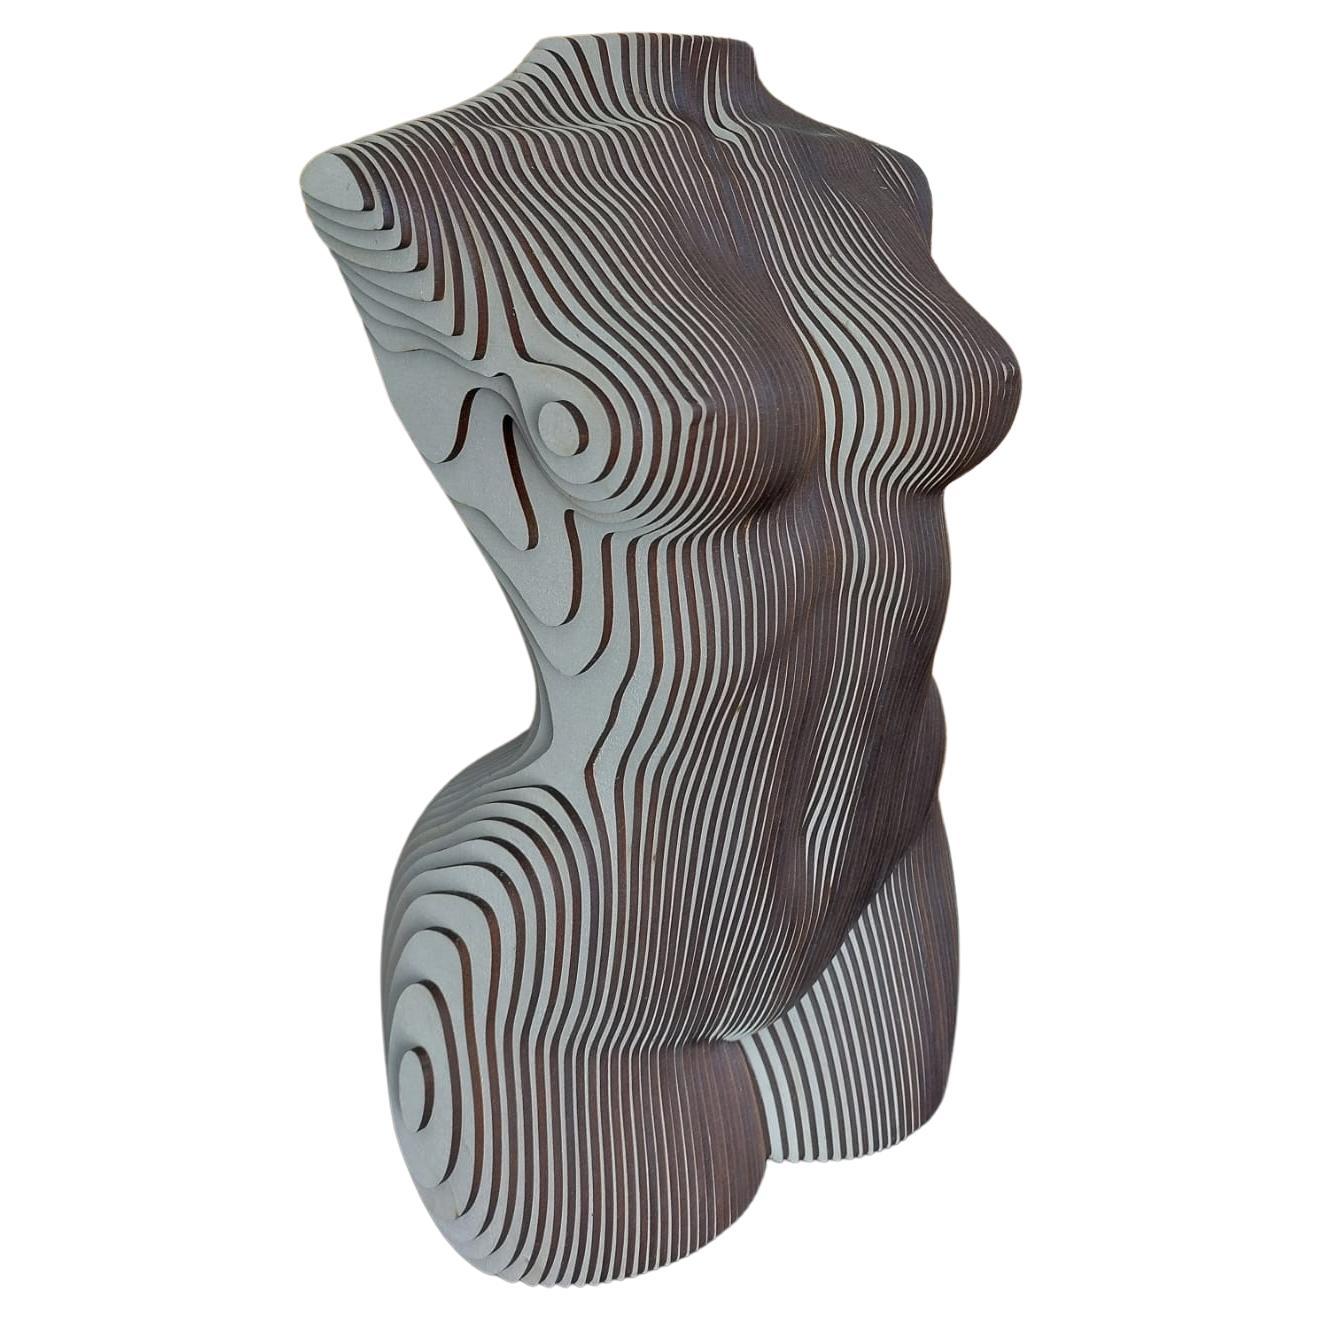 Wood white Female Torso Sculpture MDF For Sale